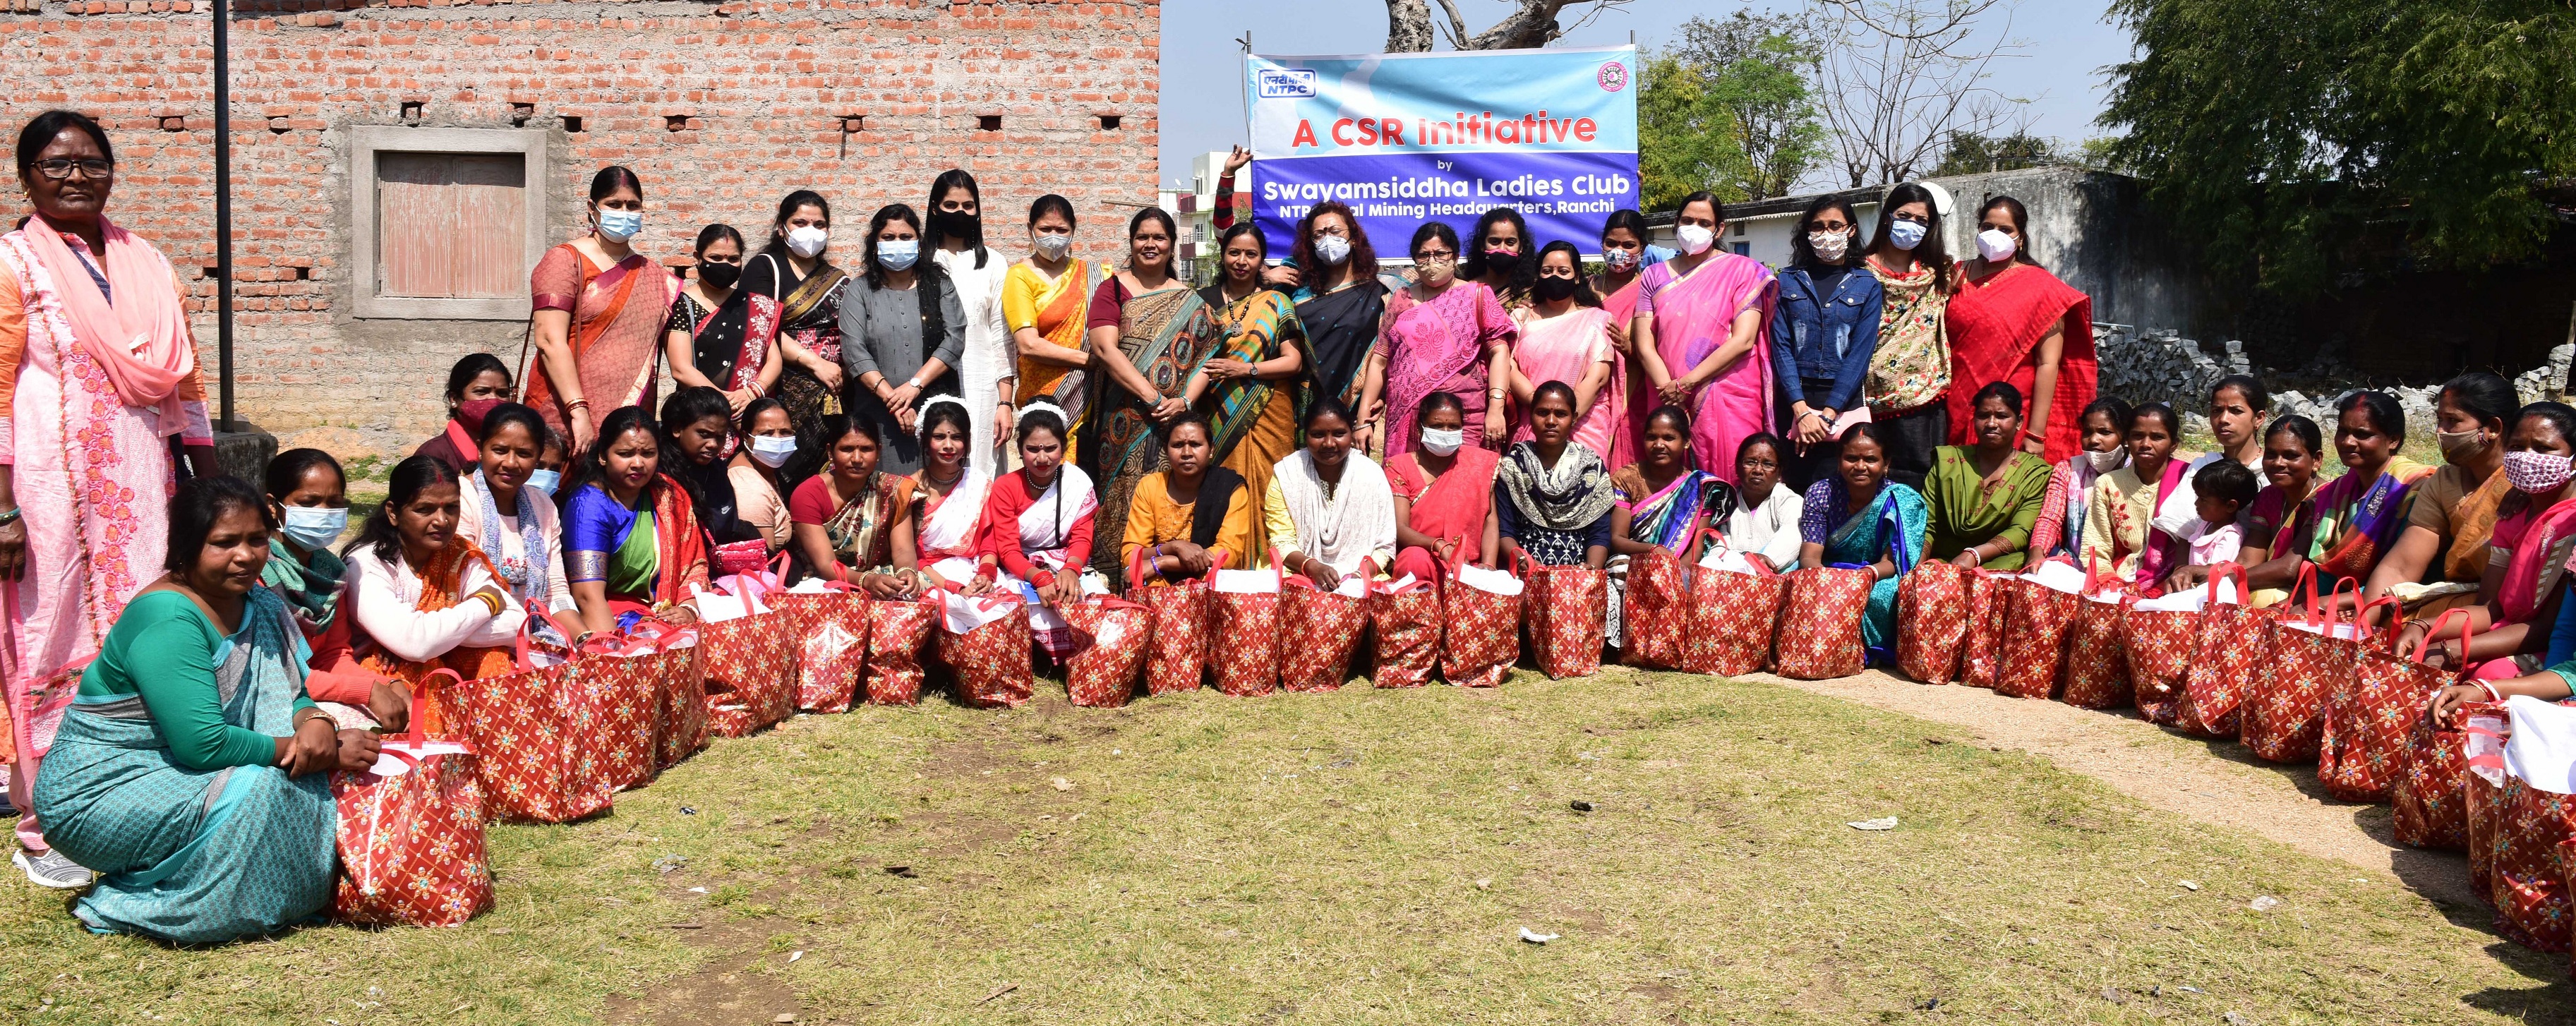 Swayamsiddha Ladies Club, NTPC Coal Mining HQ celebrates International Women's Day with self-empowered women   